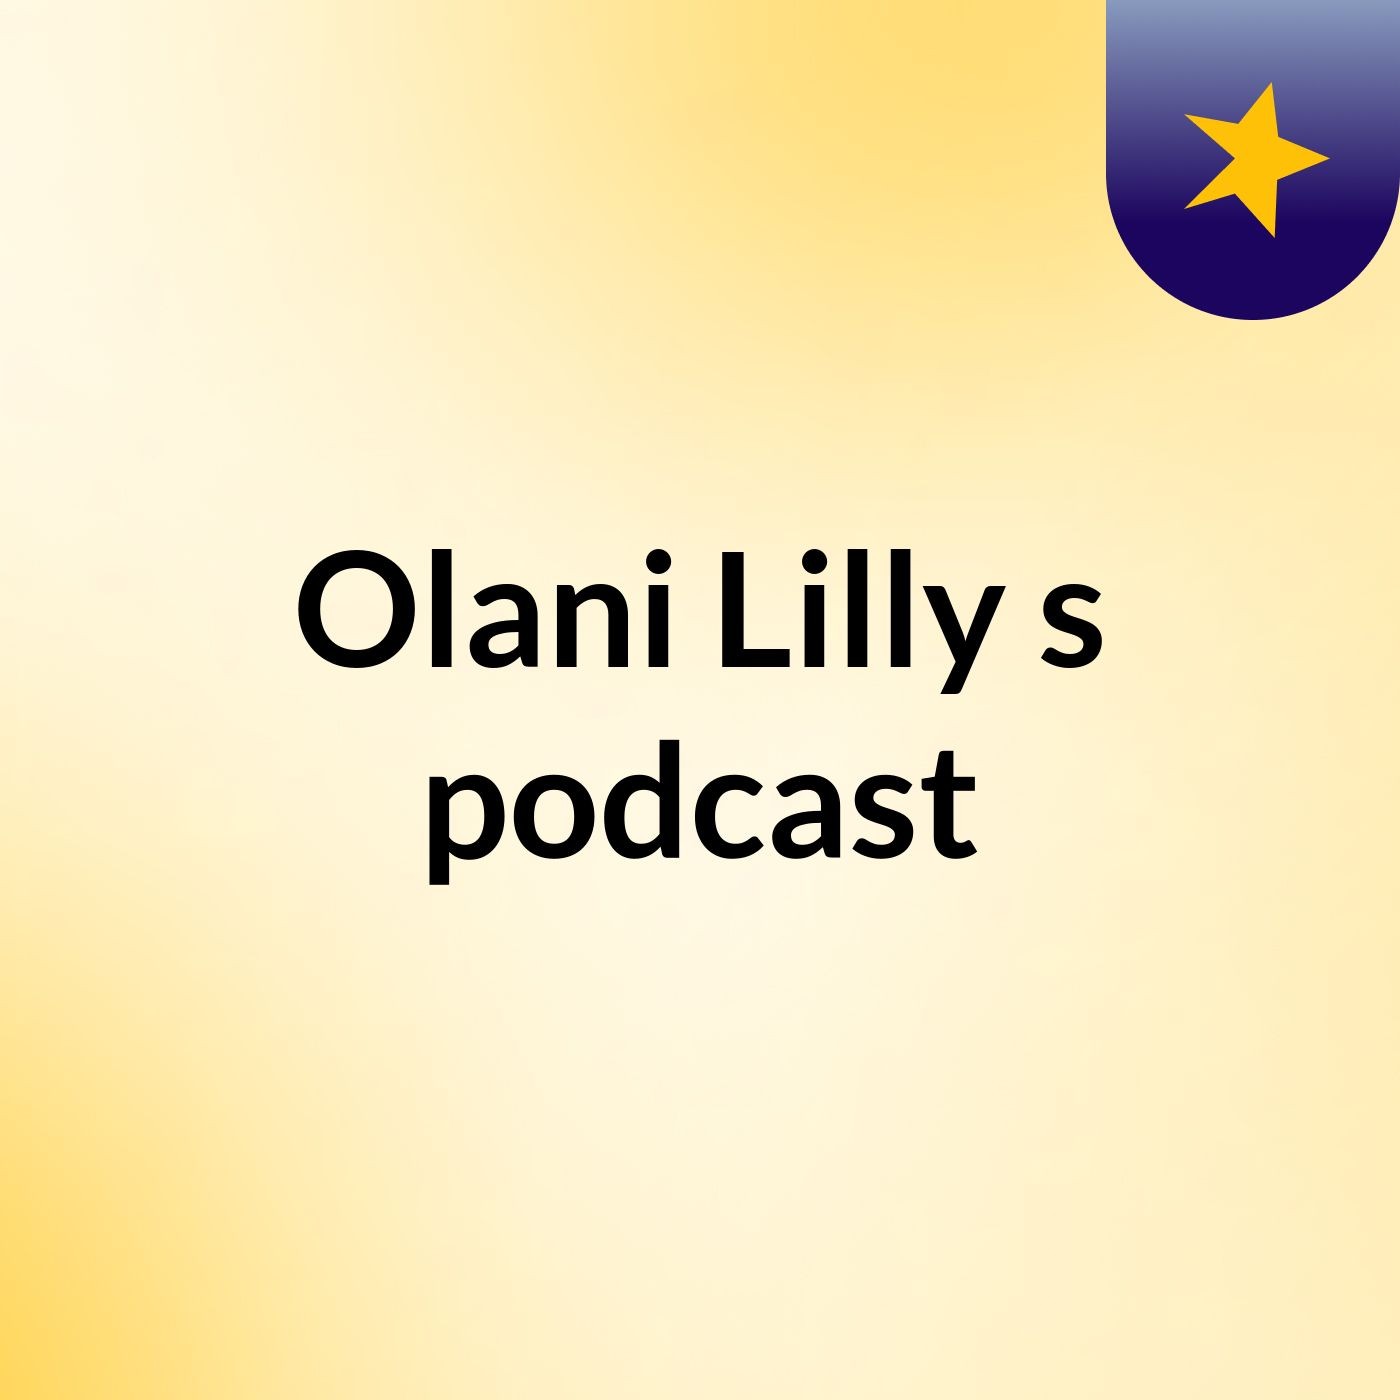 Olani Lilly's podcast